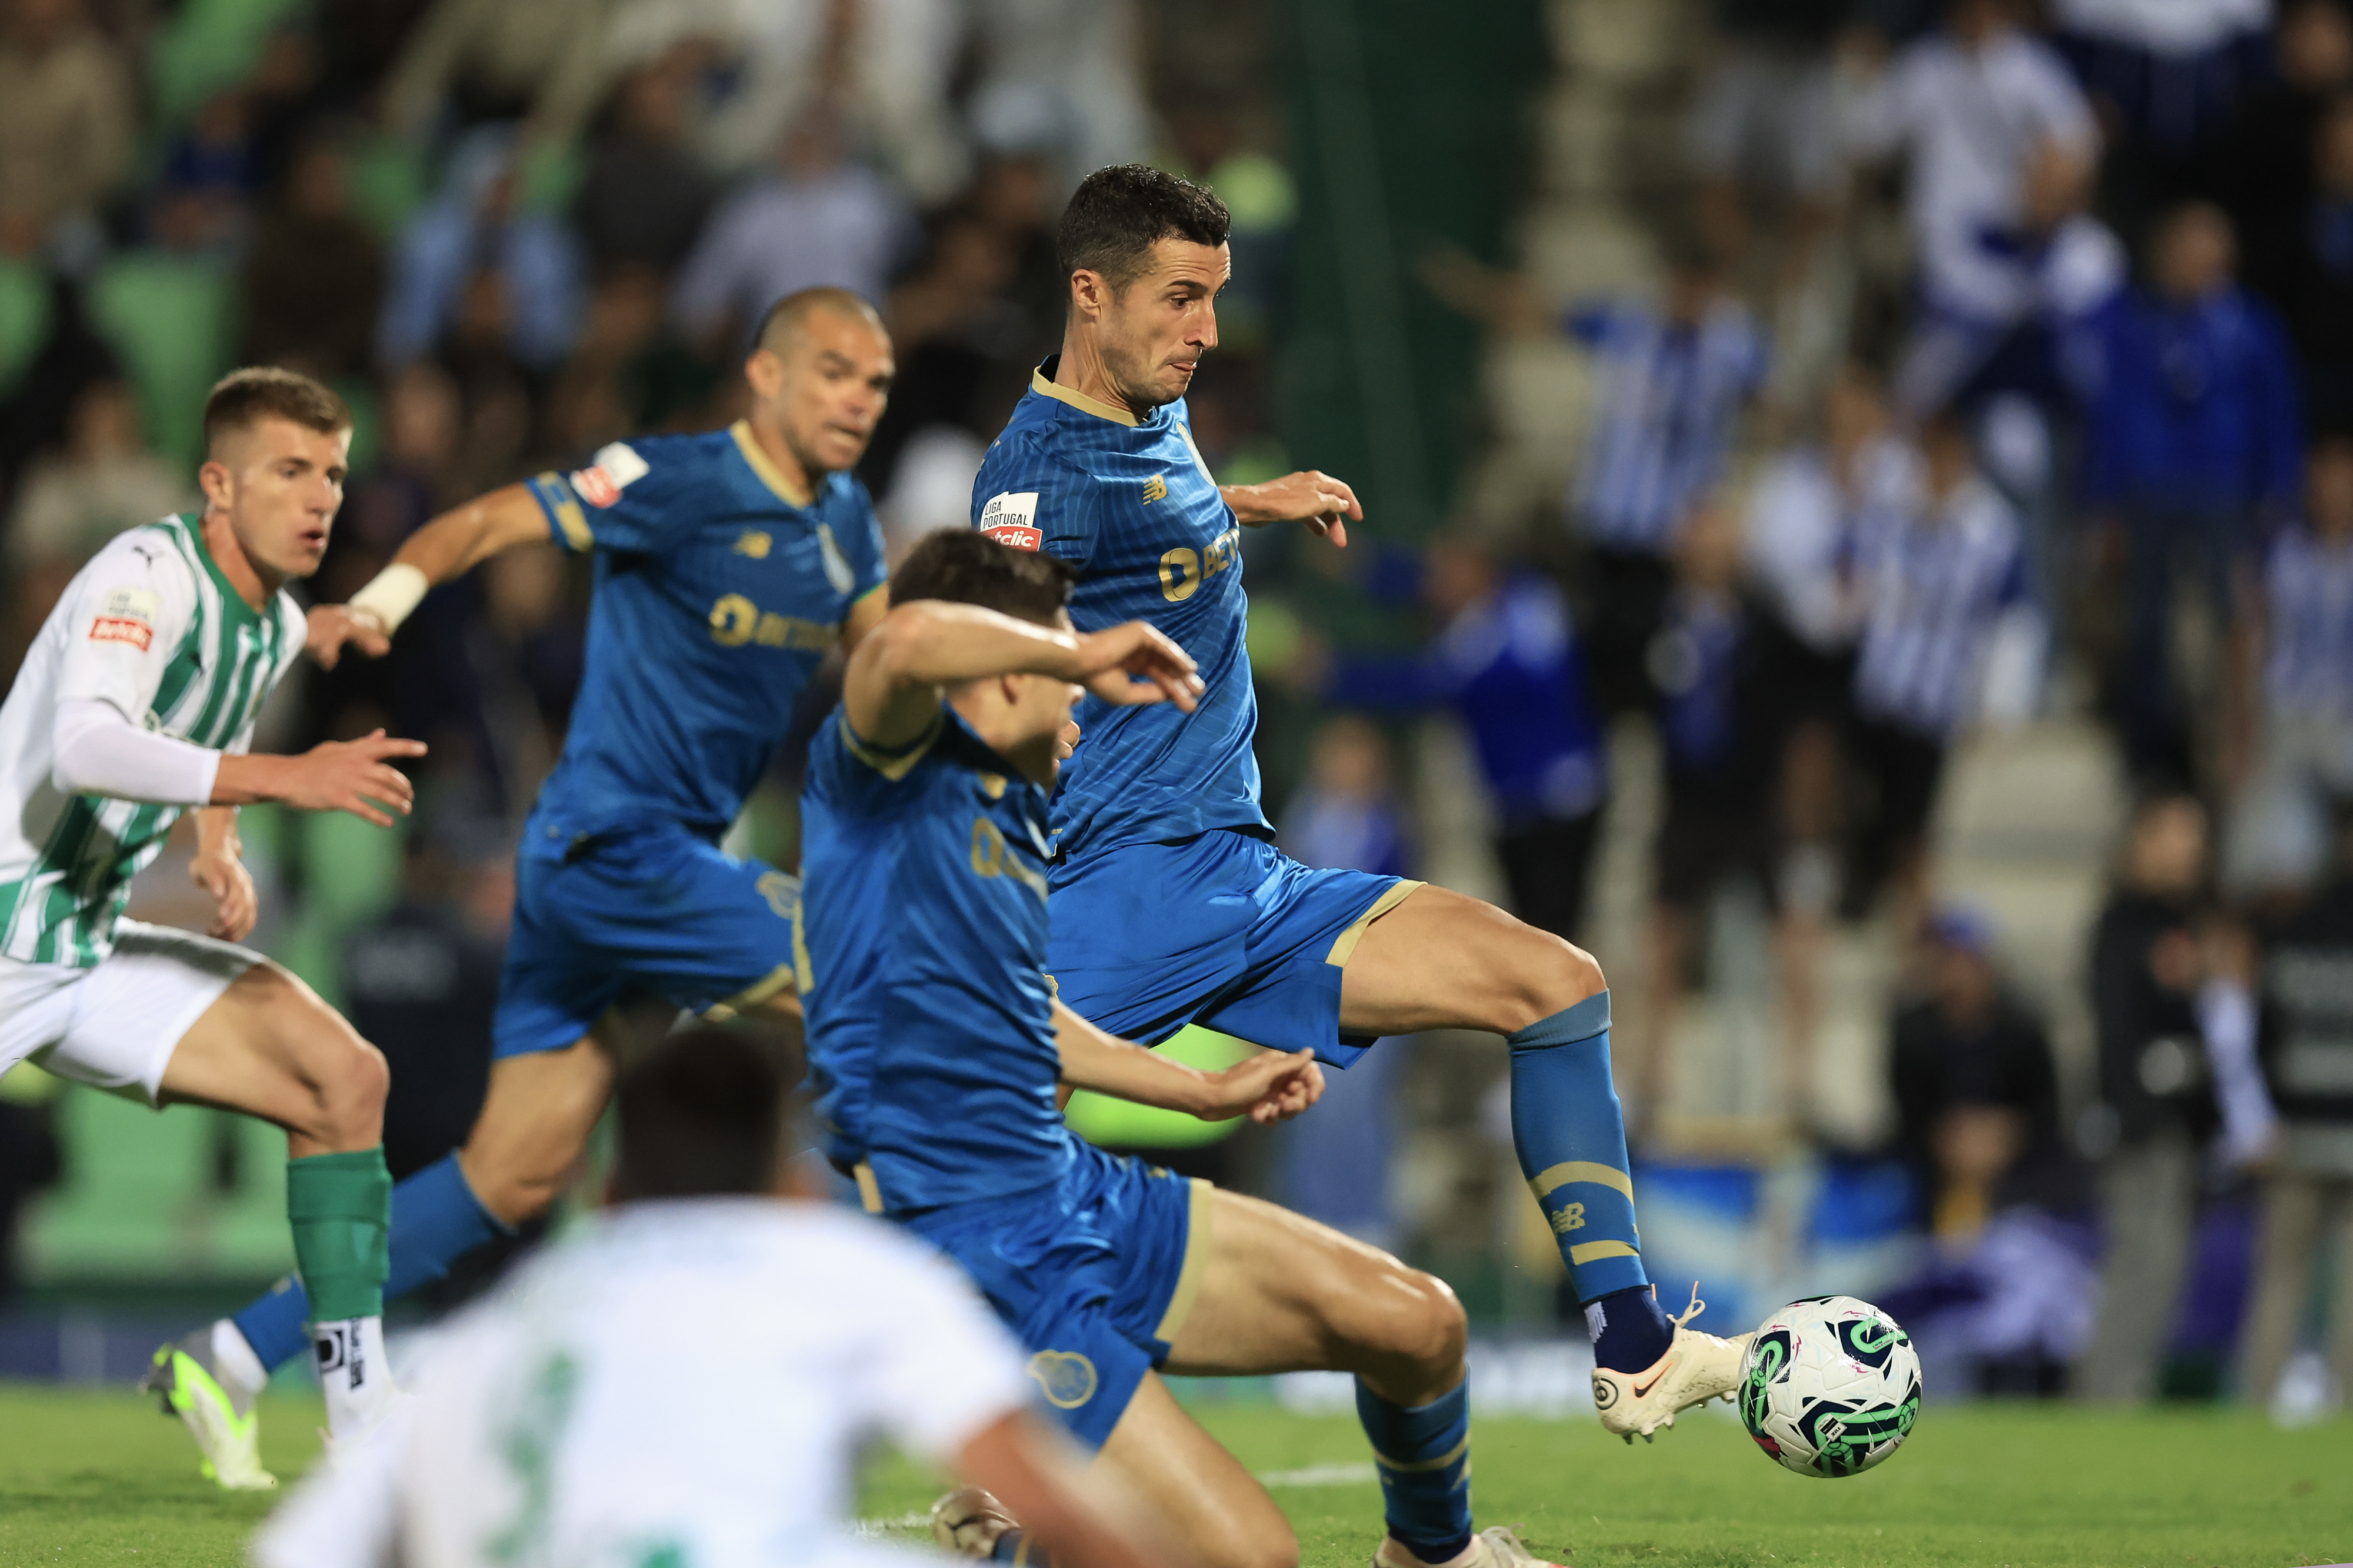 VÍDEO: Taremi adianta o FC Porto em Vizela de penálti